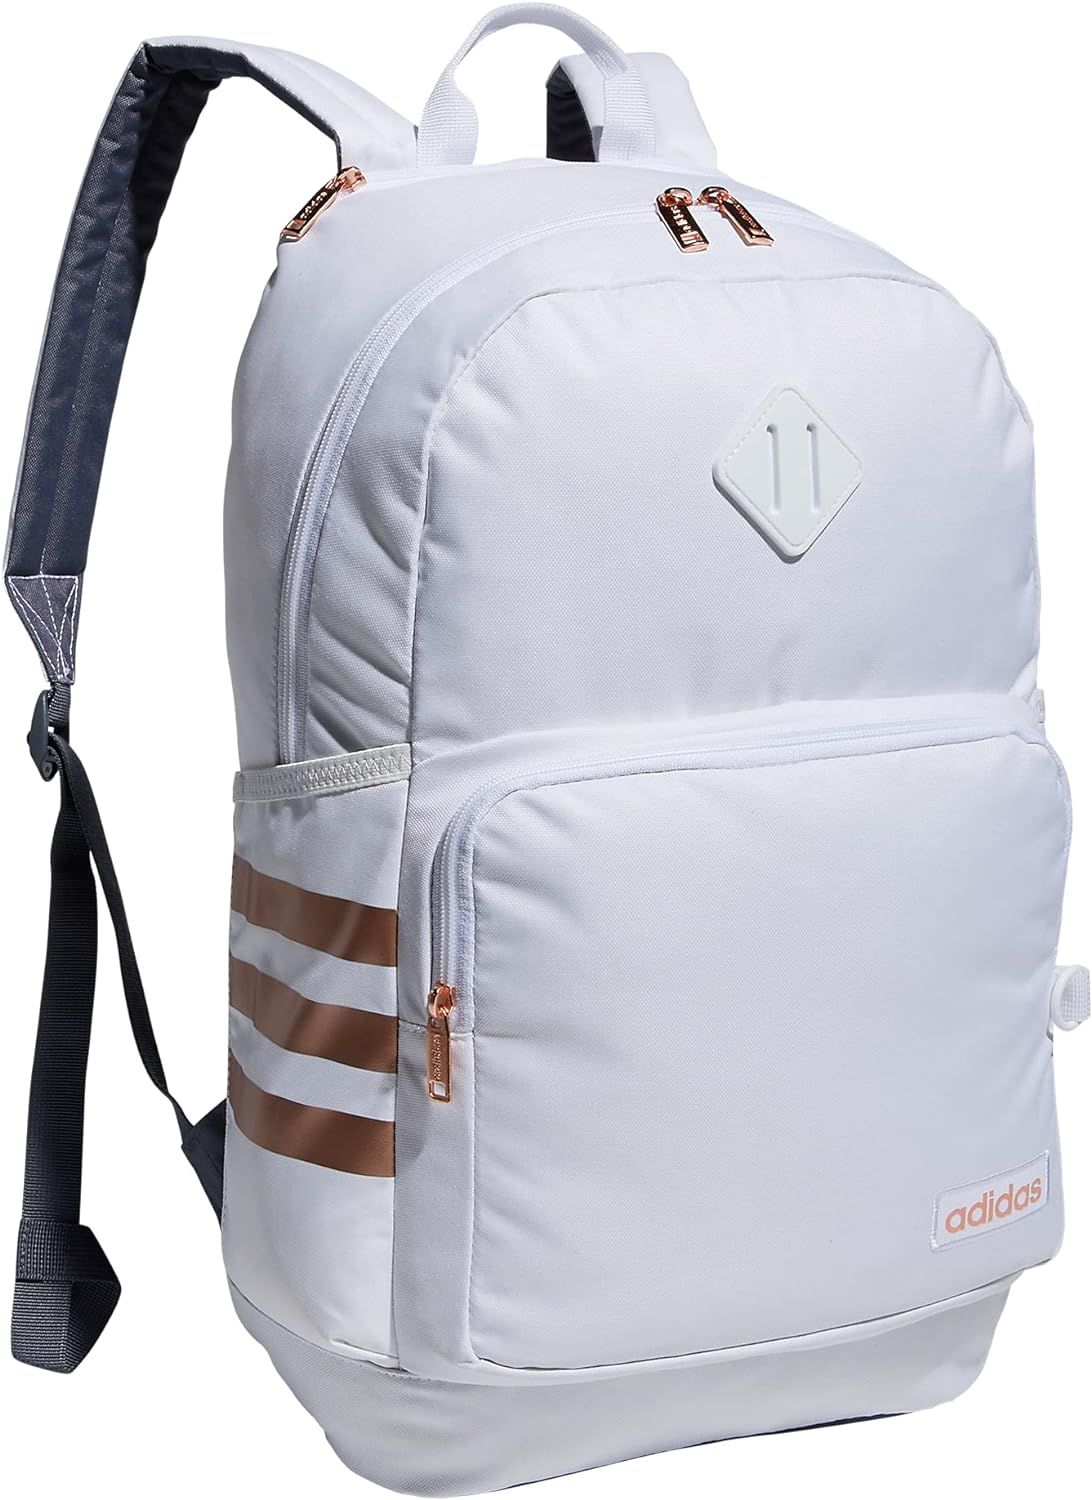 adidas Classic 3S 4 Backpack, White/Onix Grey/Rose Gold, One Size | Amazon (US)